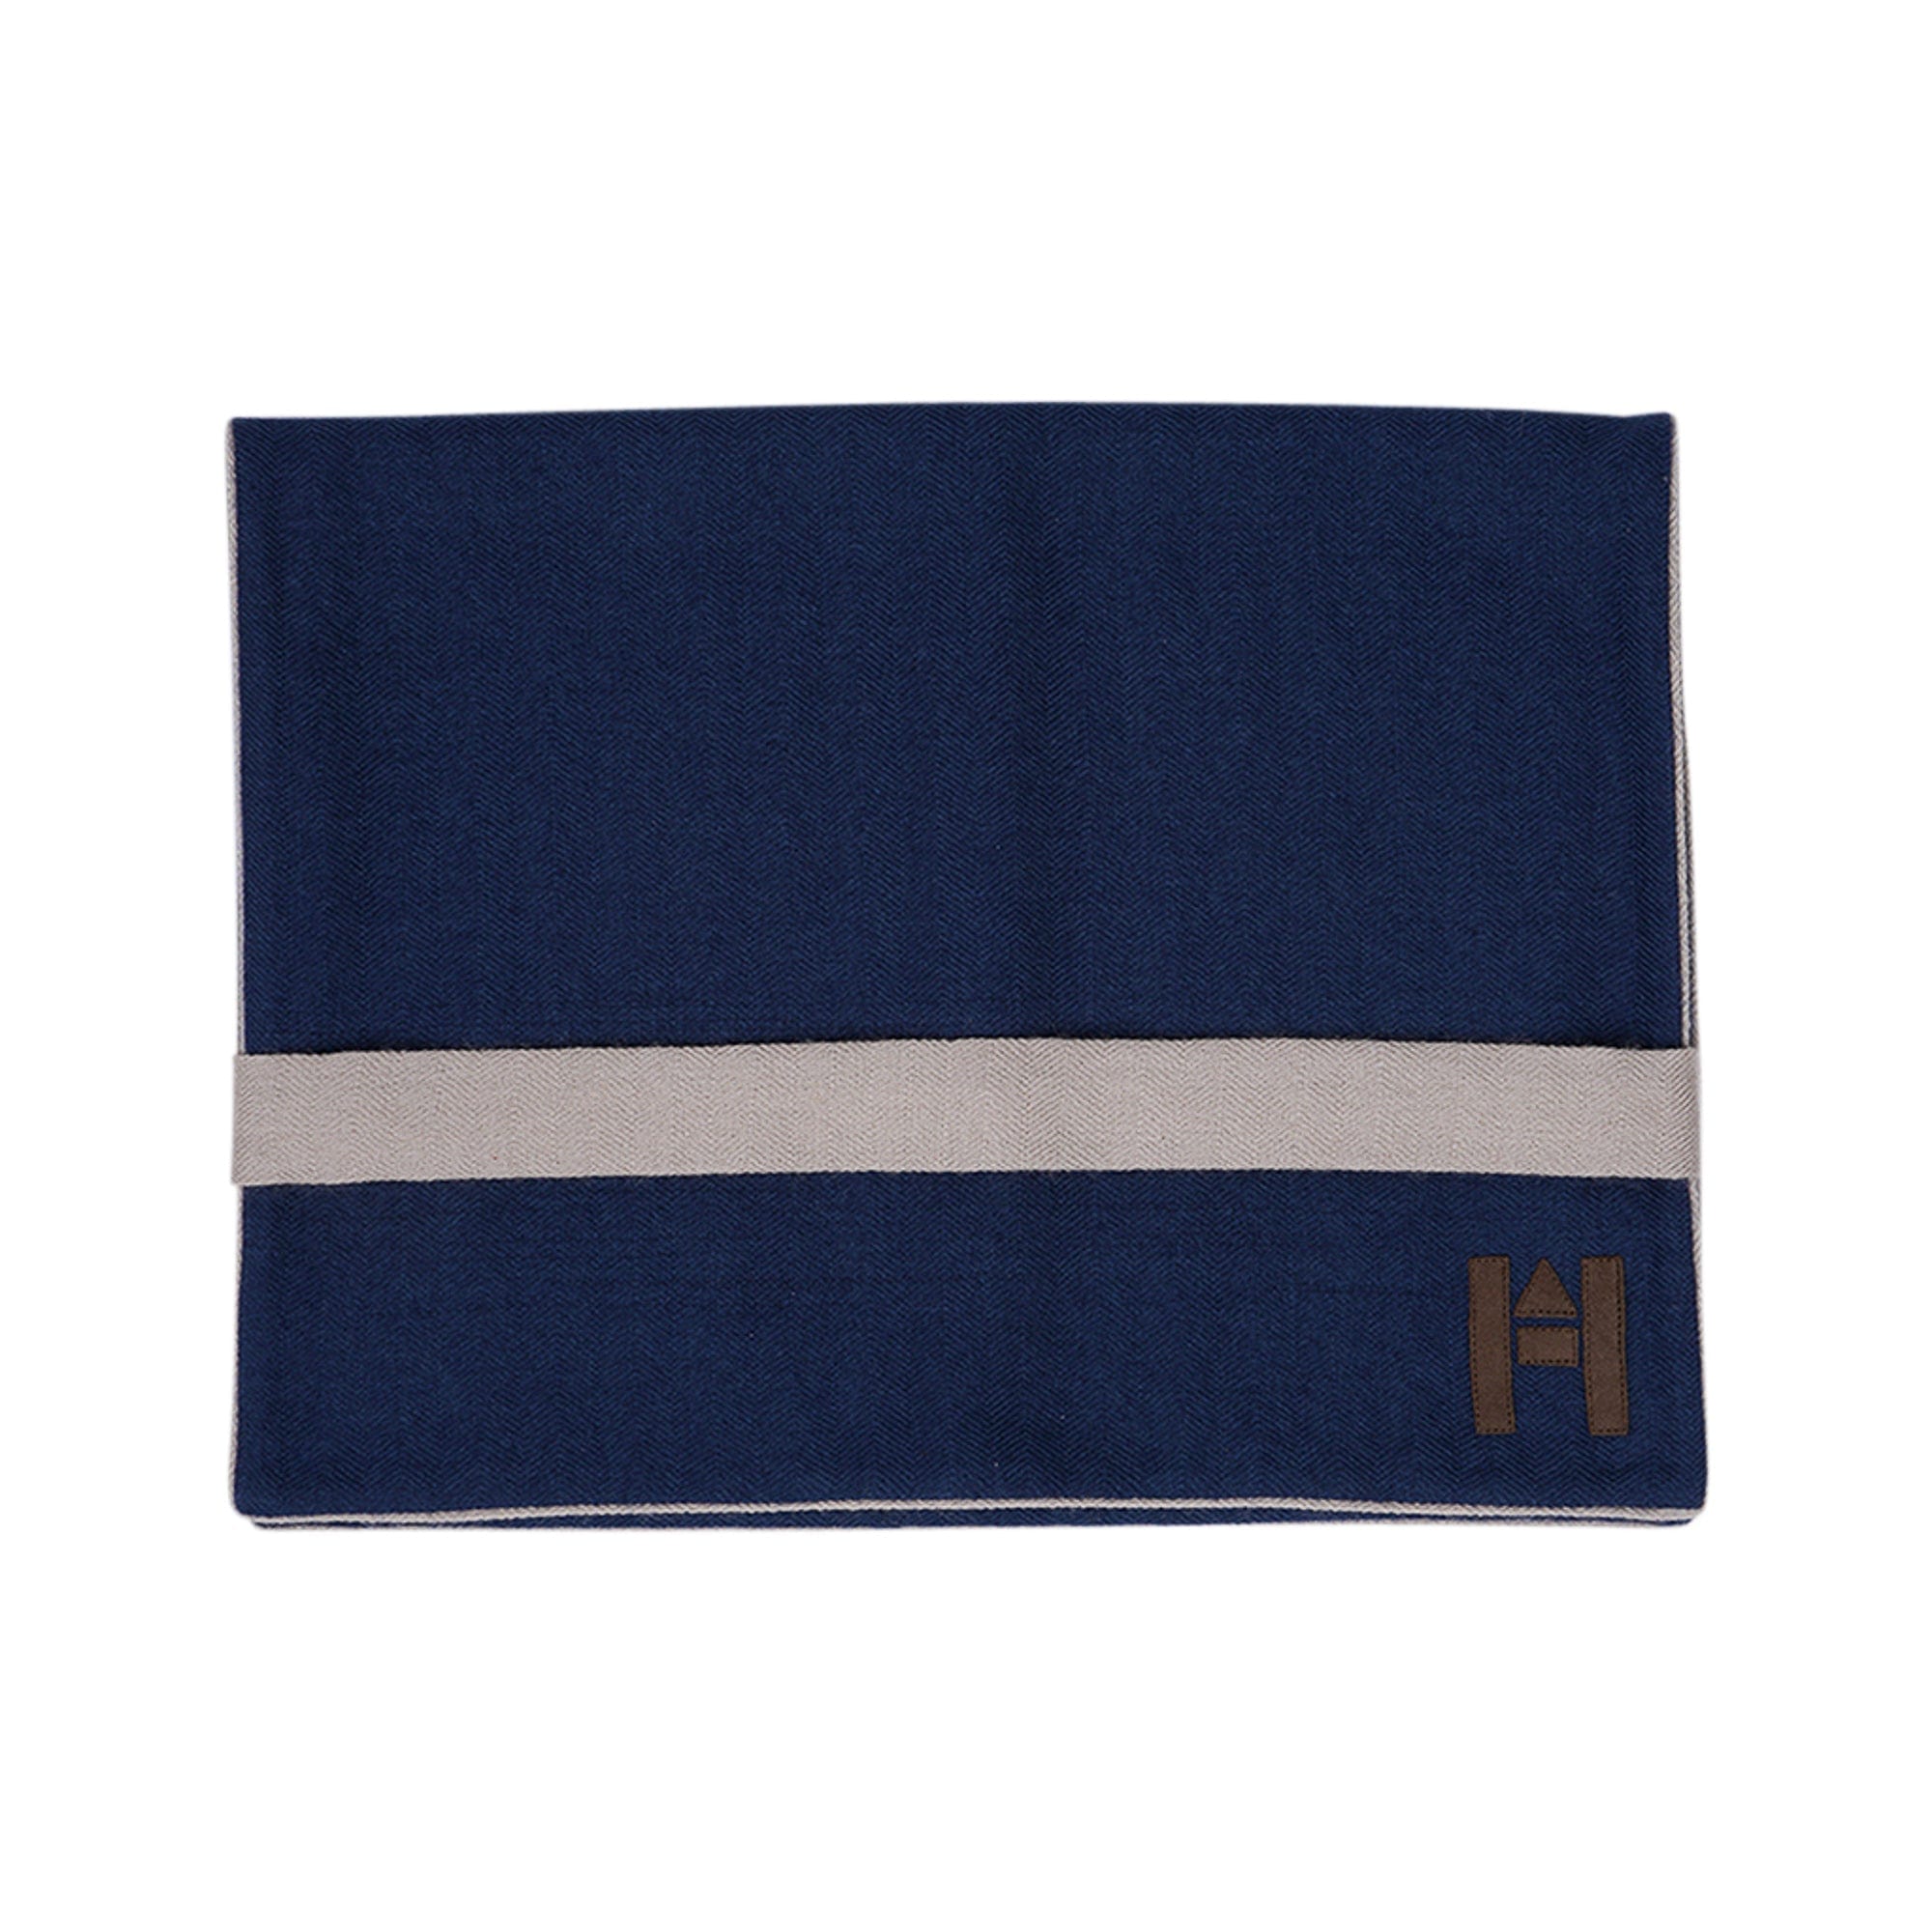 Hermes Traveler with Case Blanket Blue / Cream Cashmere